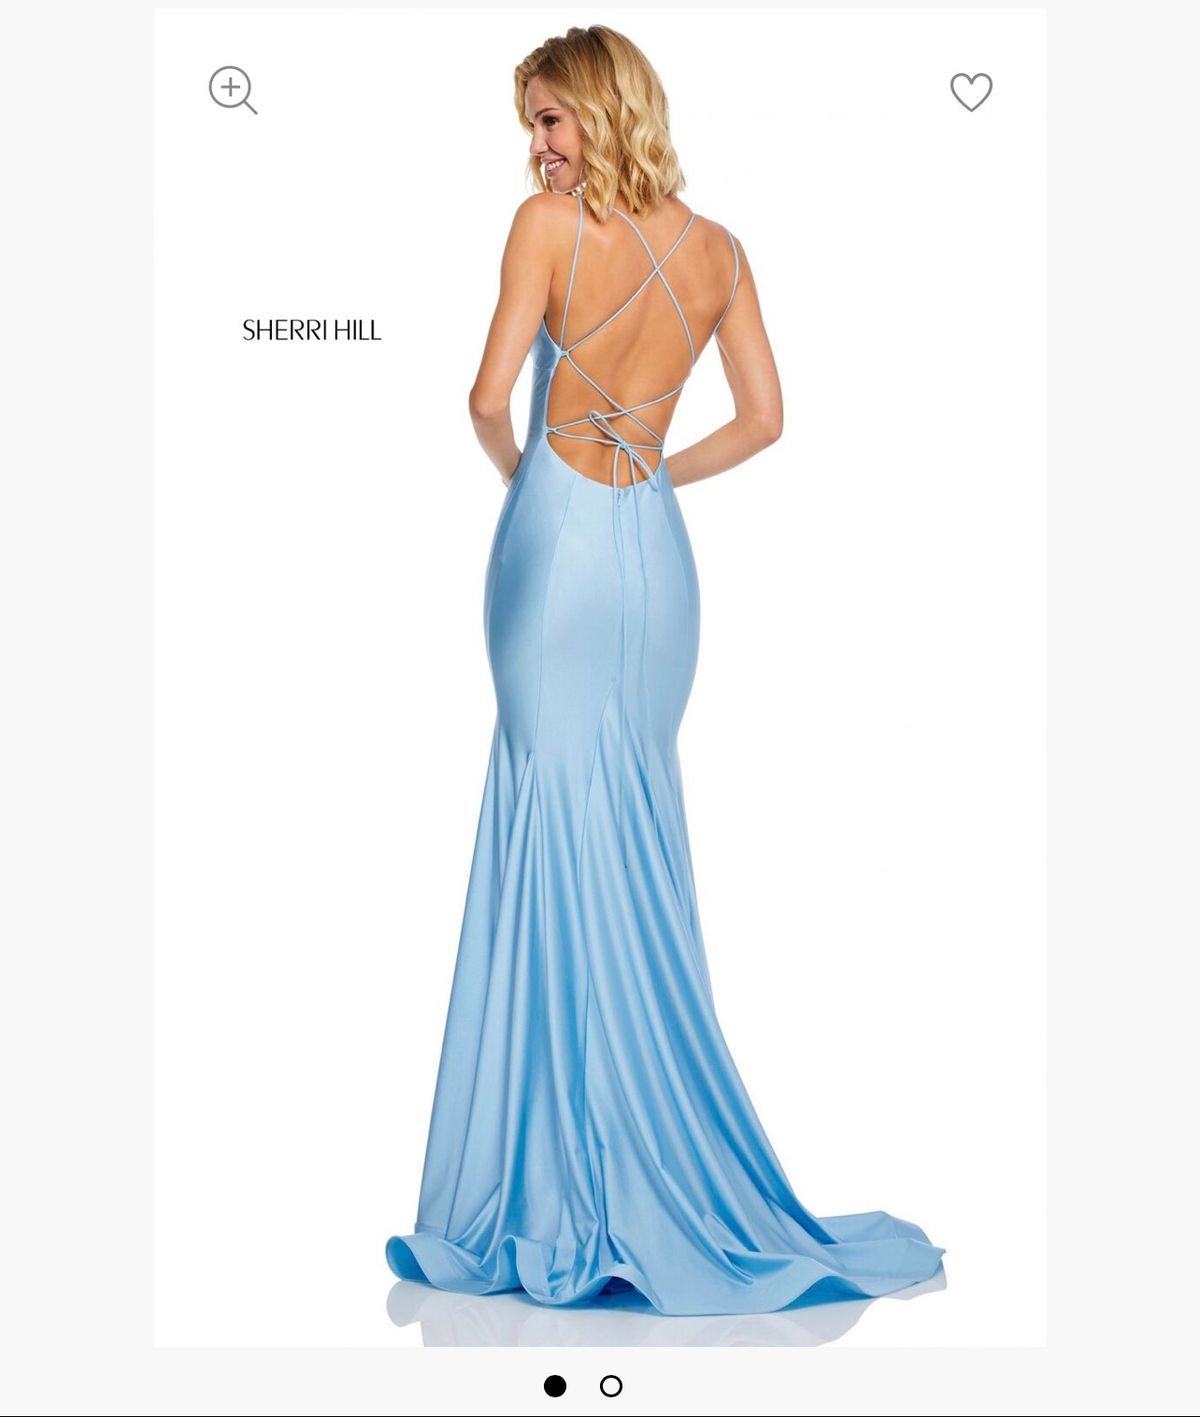 Sherri Hill Size 8 Prom Light Blue Mermaid Dress on Queenly